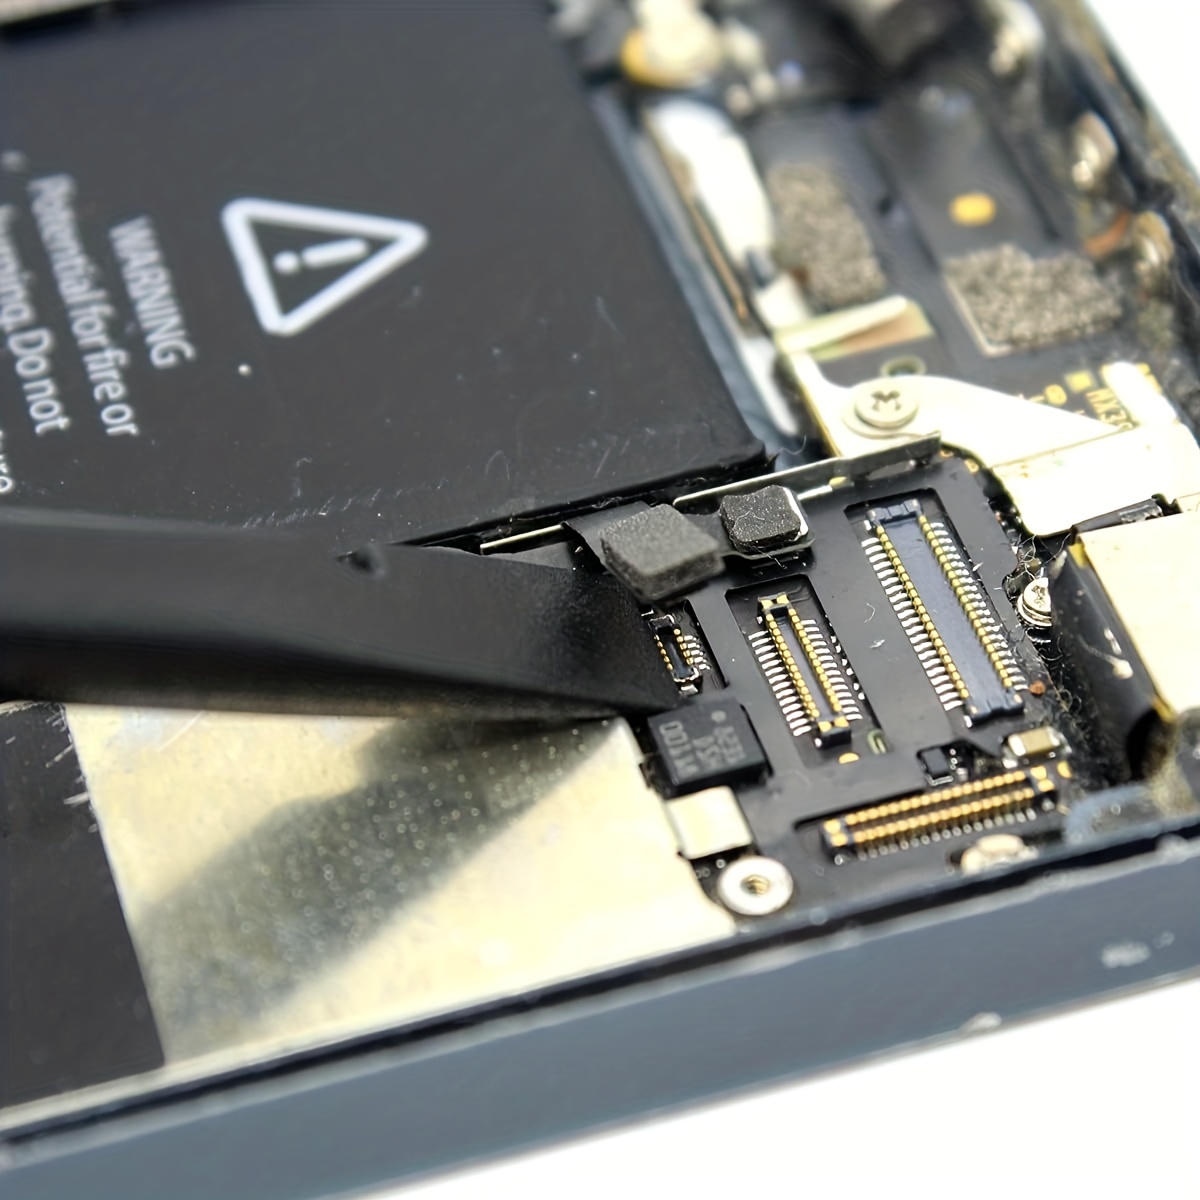 Nylon Plastic Spudger Stick Pry Opening Repair Tools for iPhone iPad  Laptops